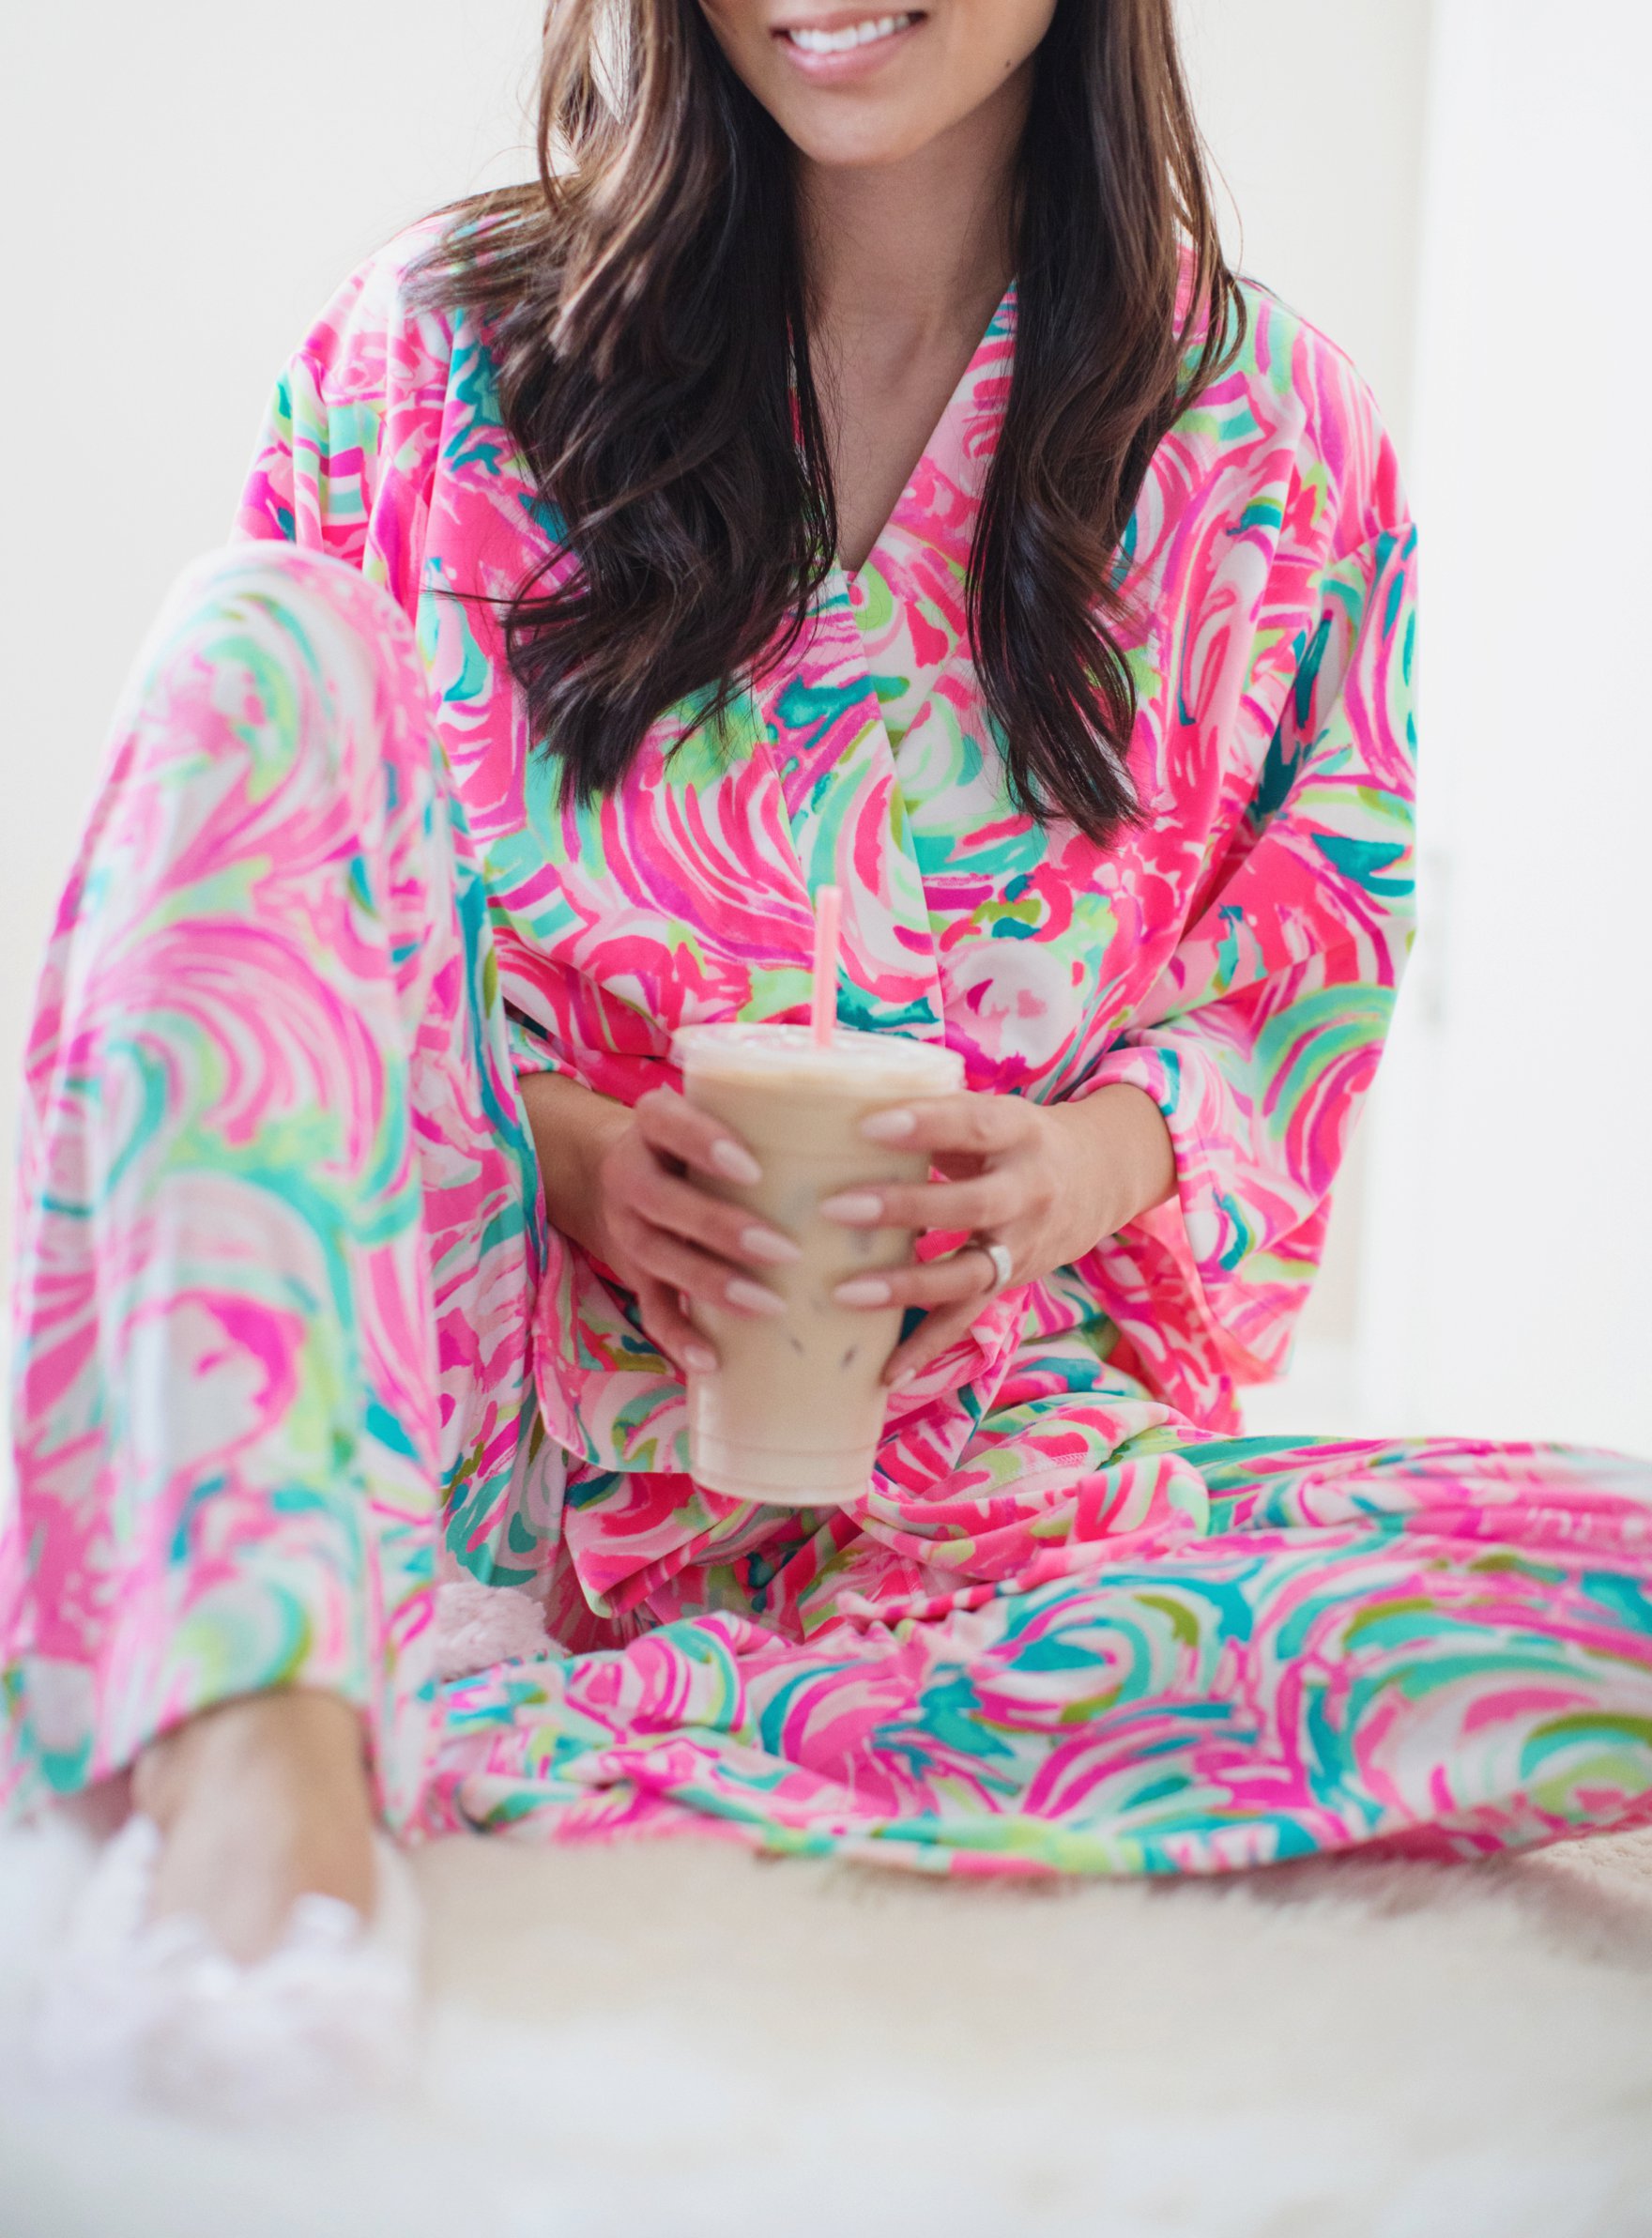 Lilly Pulitzer pajamas and robe